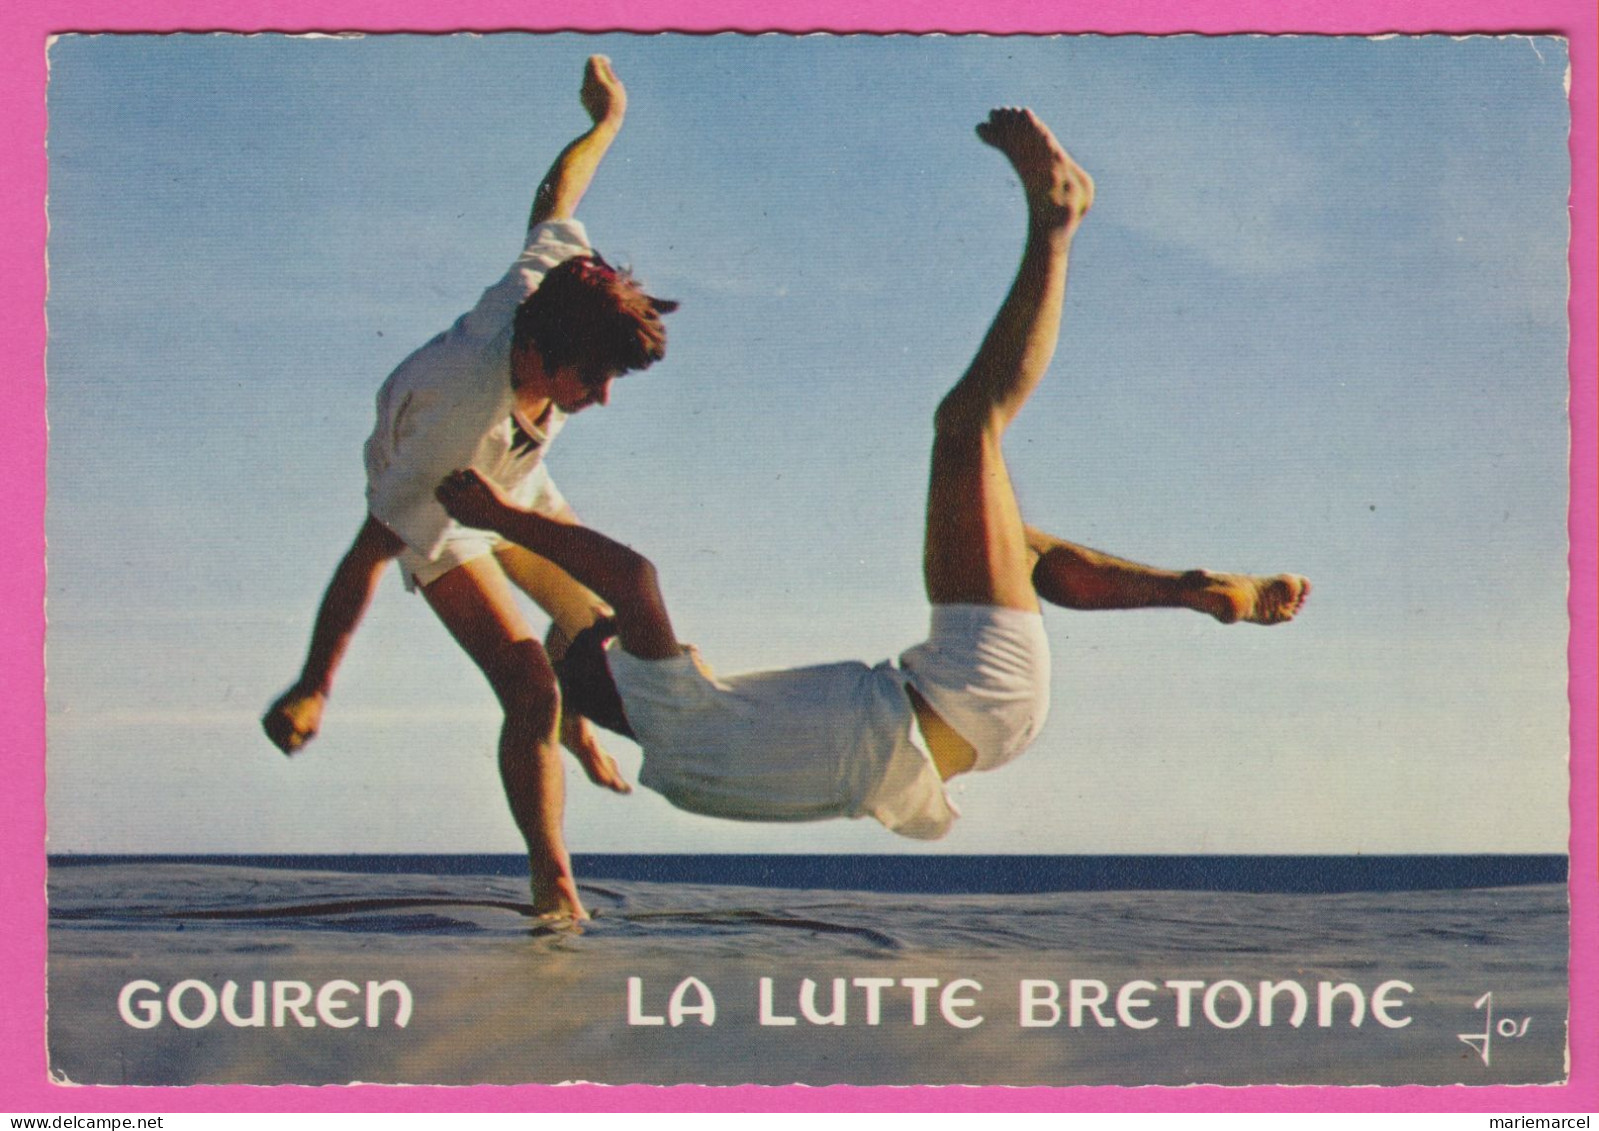 LA LUTTE BRETONNE - GOUREN - CPM Dentelée Grand Format - Lutte Entre 2 Hommes - Wrestling